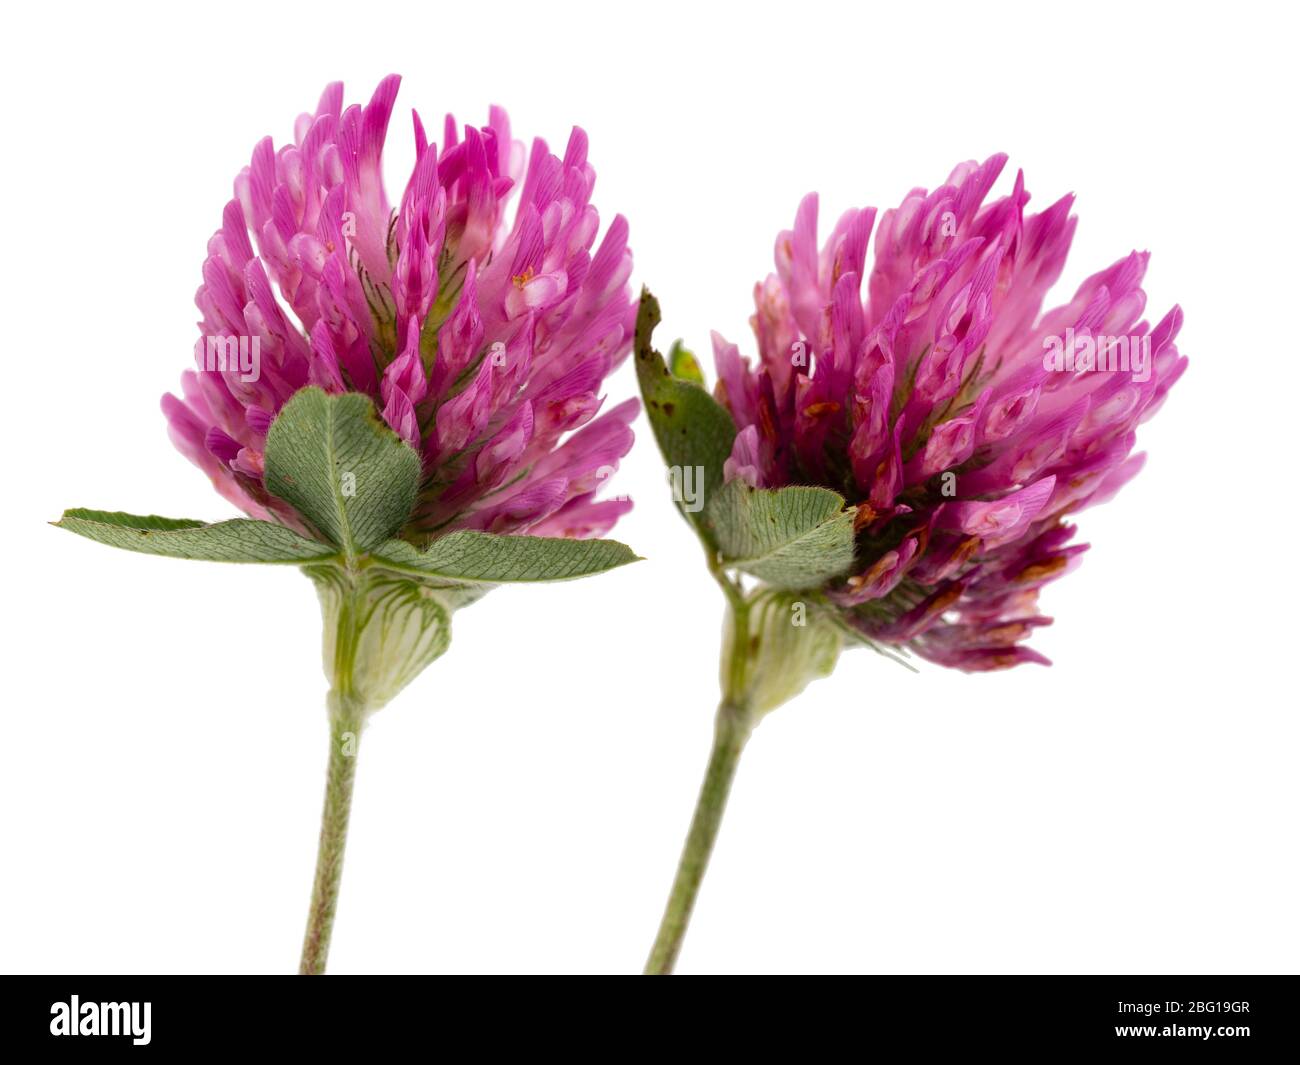 Flower heads of the UK grassland wild flower, red clover, Trifolium pratense, on a white background Stock Photo